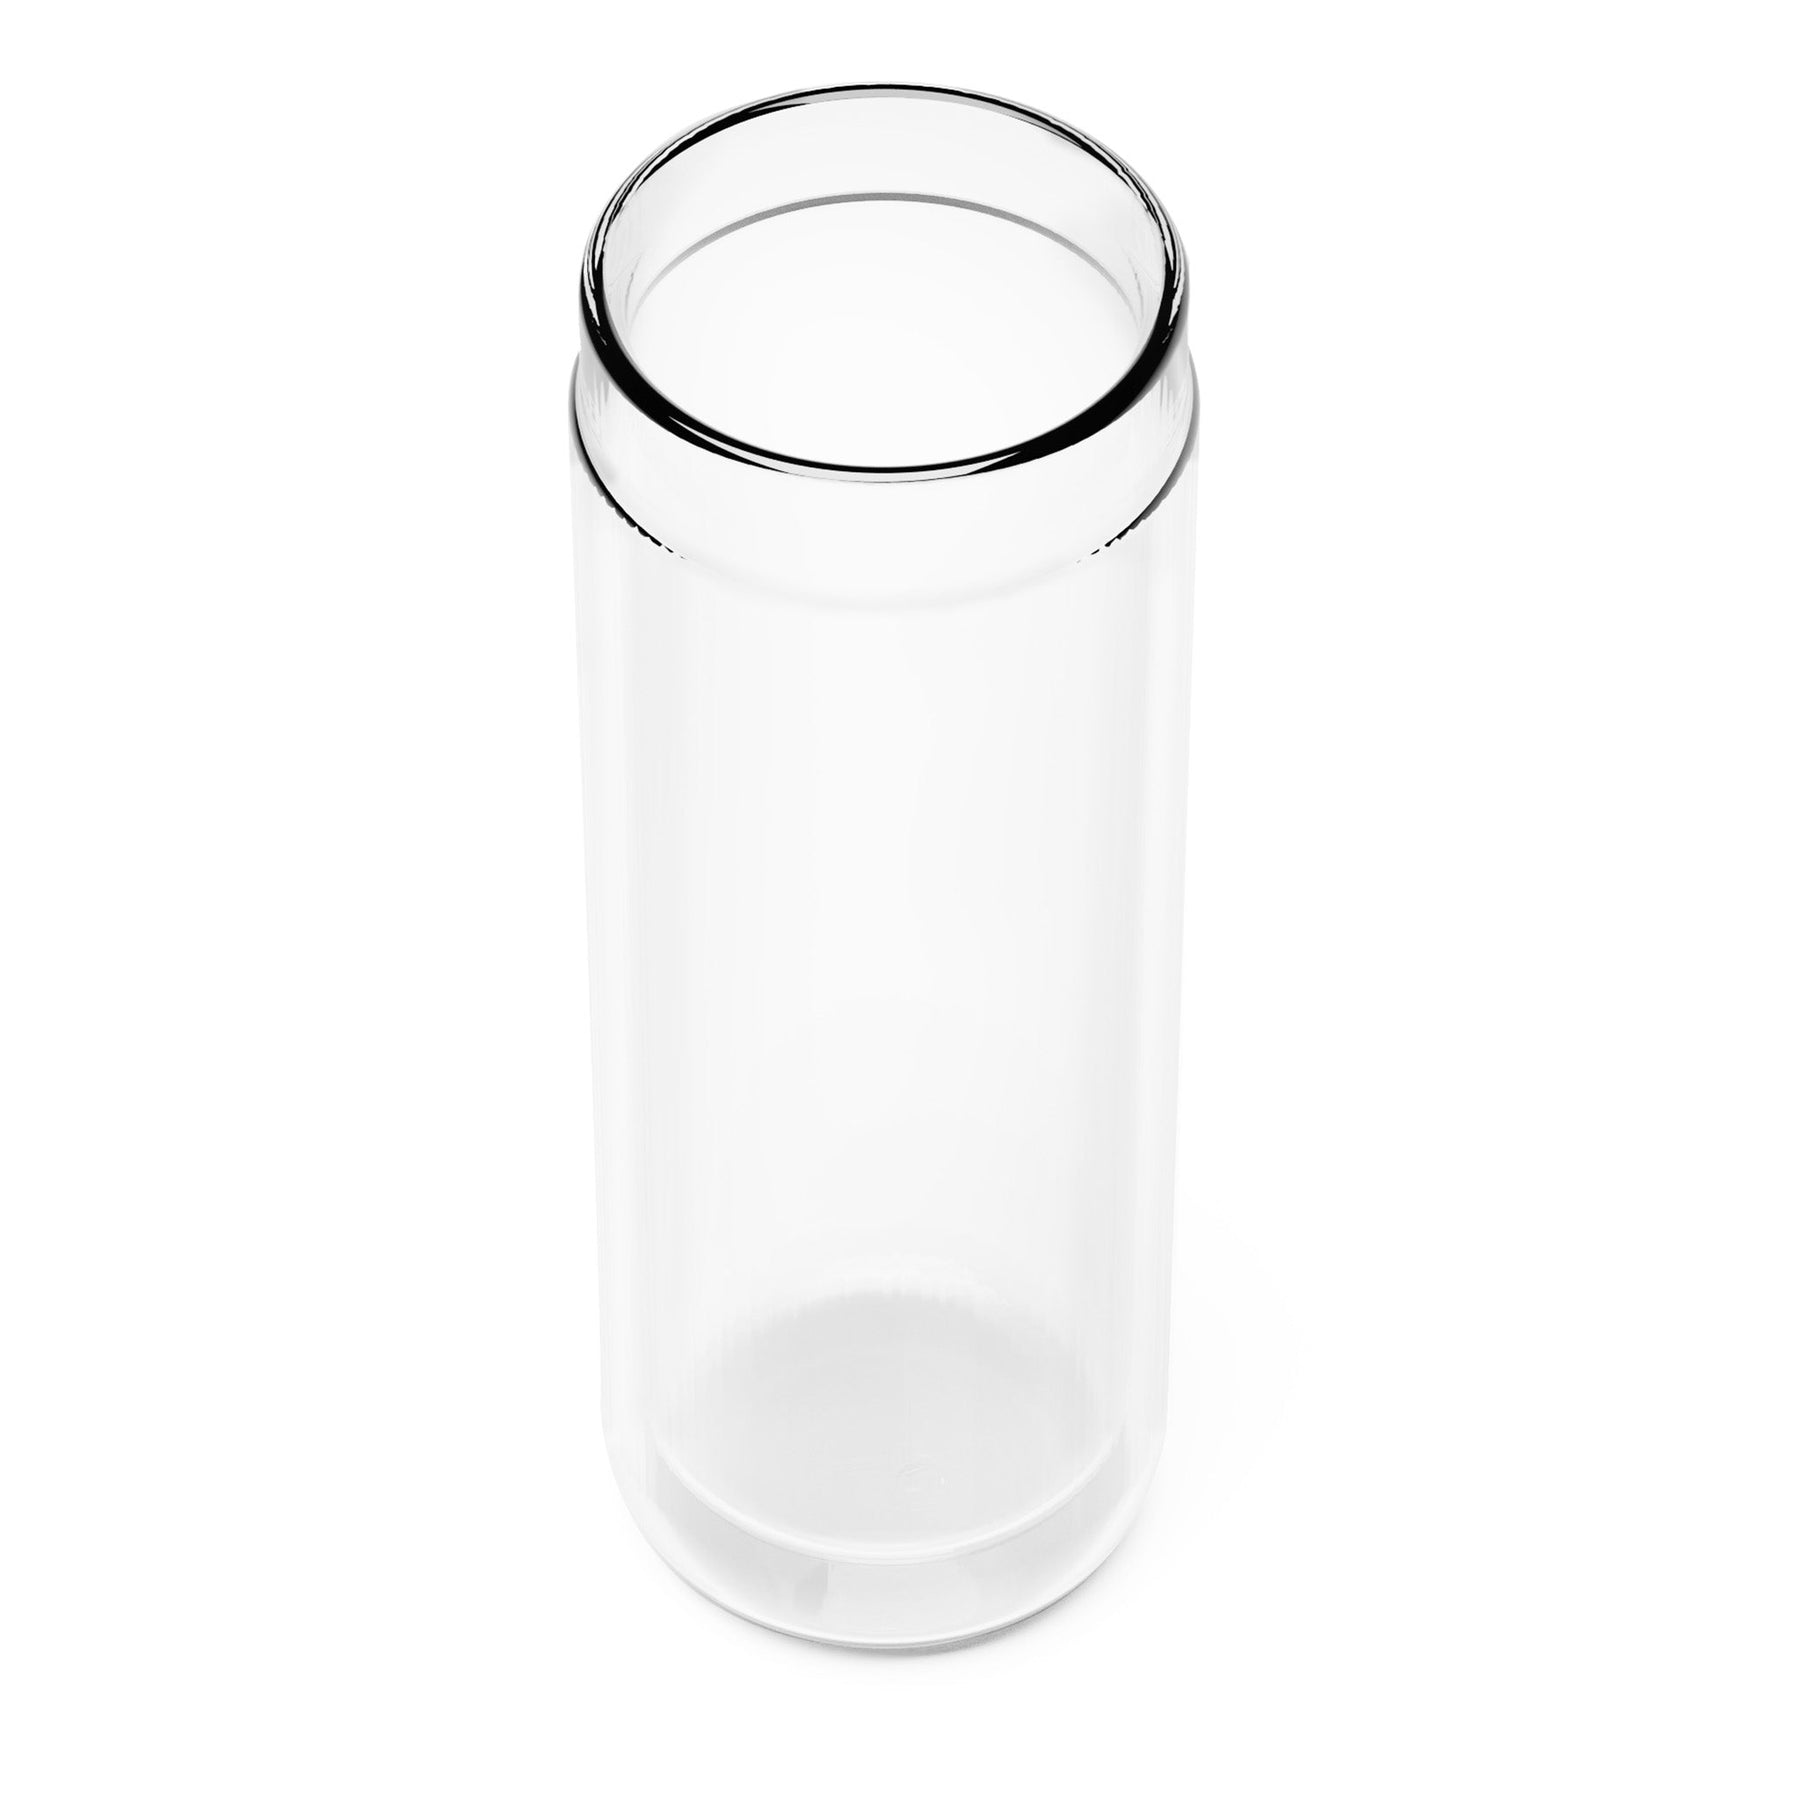 BKR Juniper 500 ml - Glass Water Bottle: 16oz - Glass/Silicone BPA-Free Dishwasher Safe